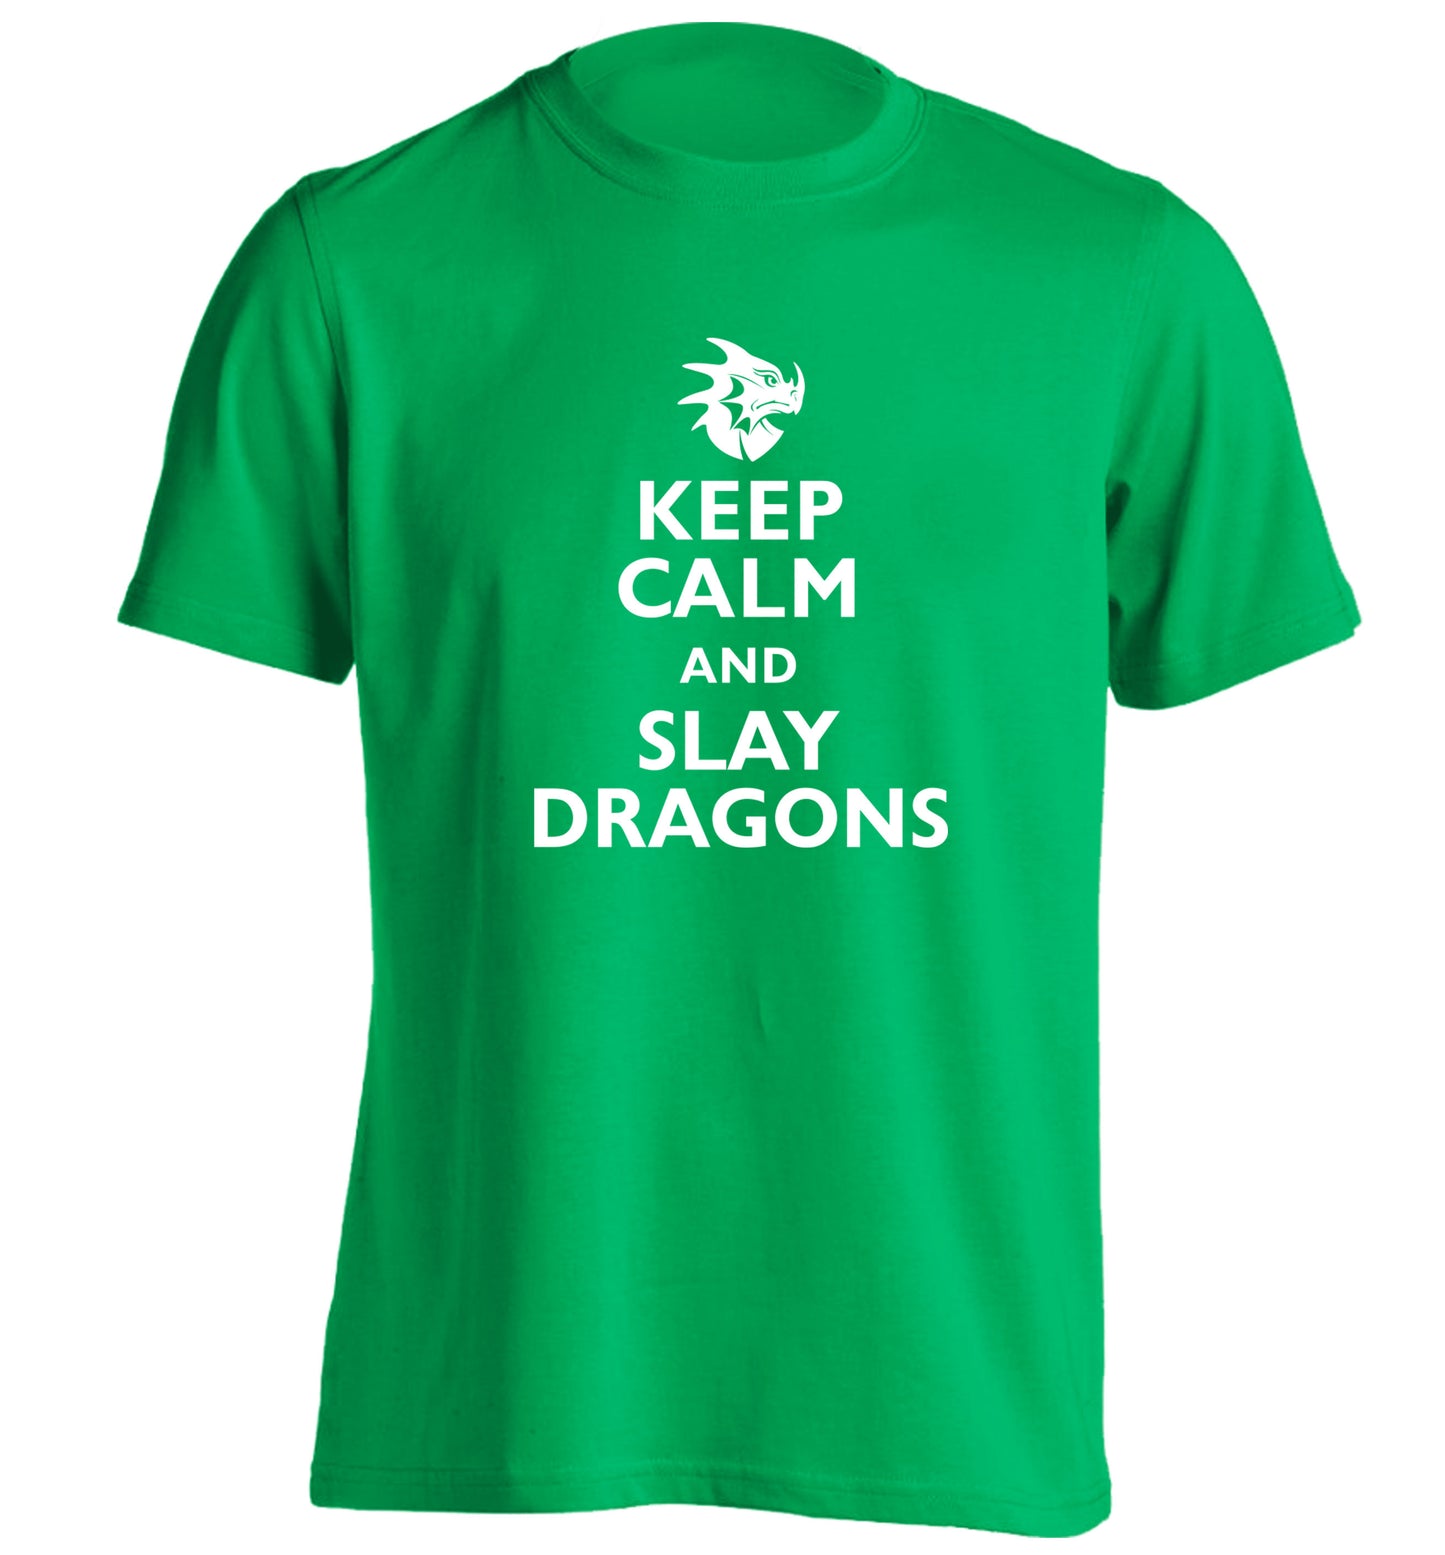 Keep calm and slay dragons adults unisex green Tshirt 2XL